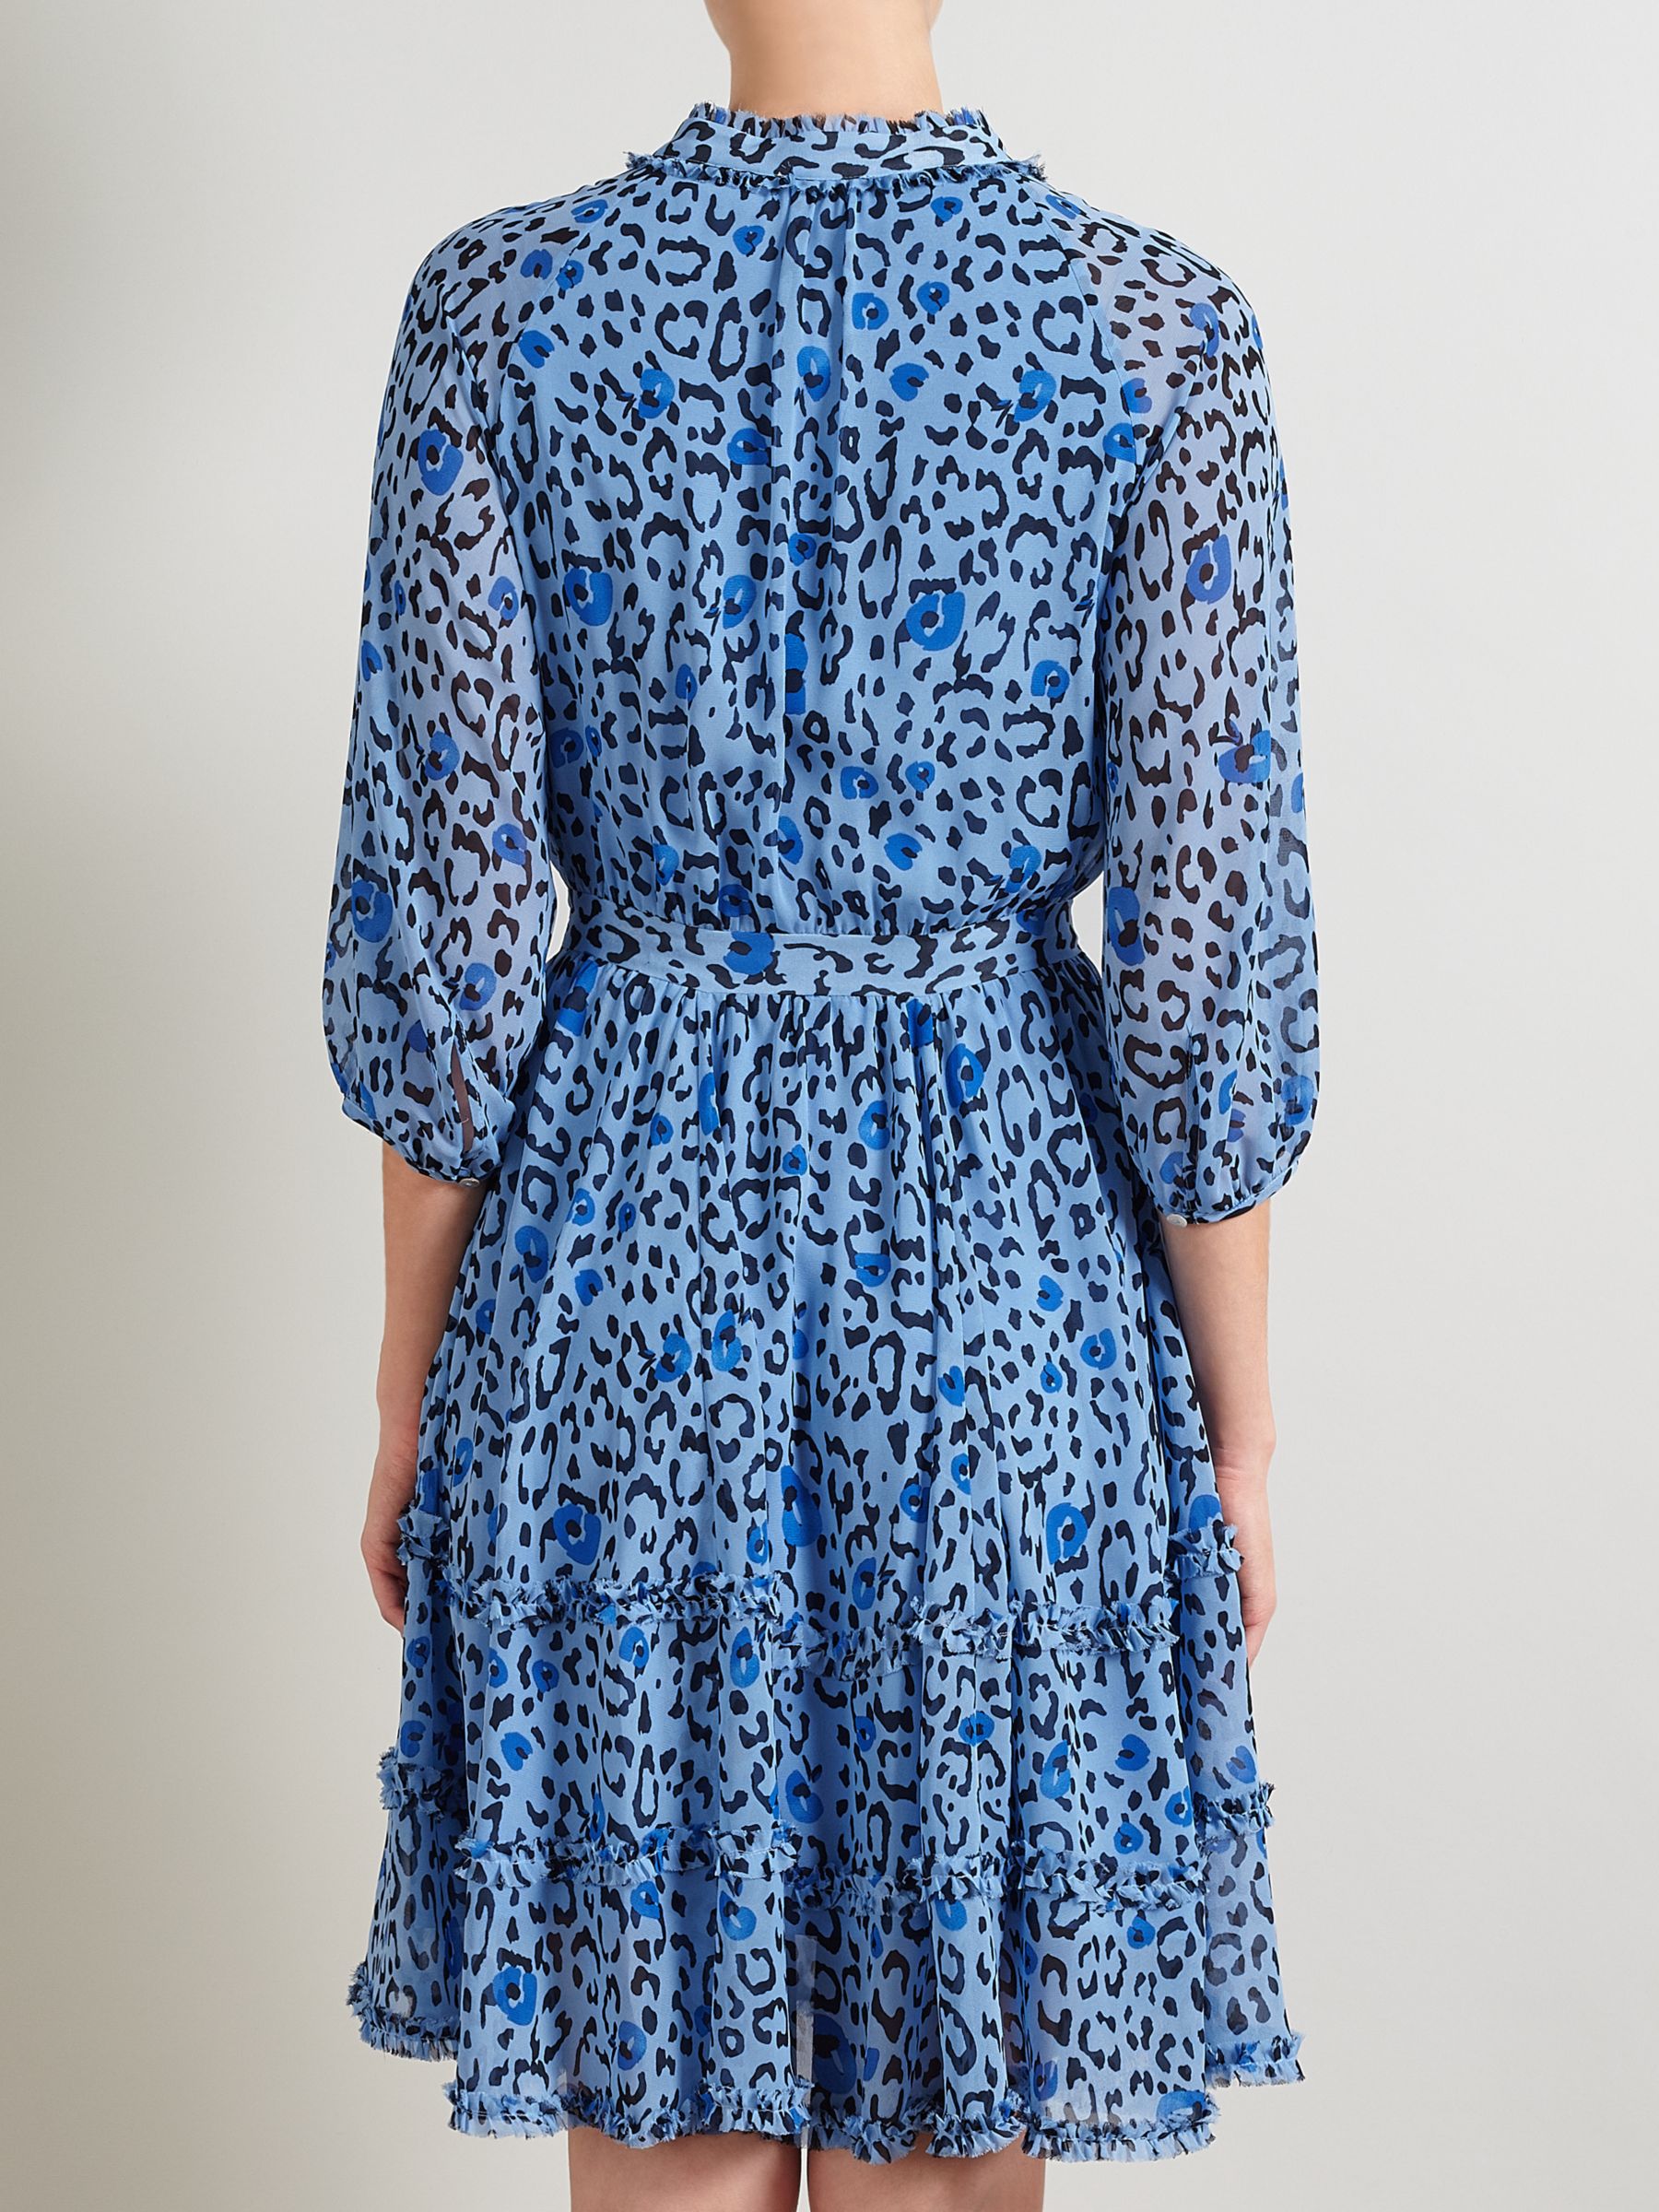 somerset by alice temperley leopard print dress